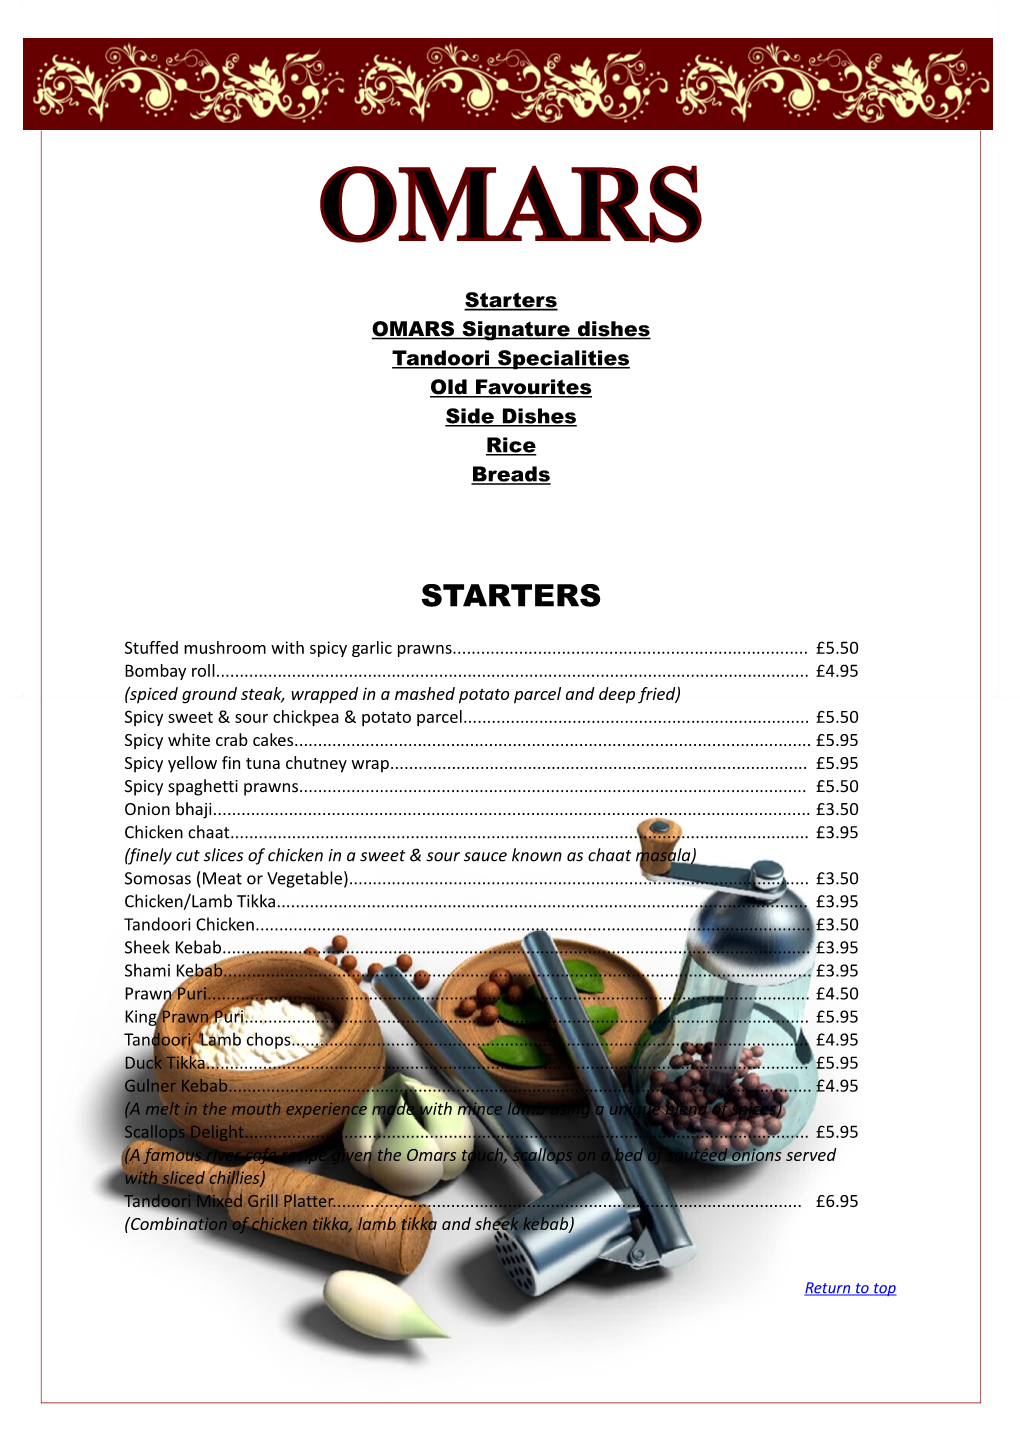 OMARS Signature Dishes